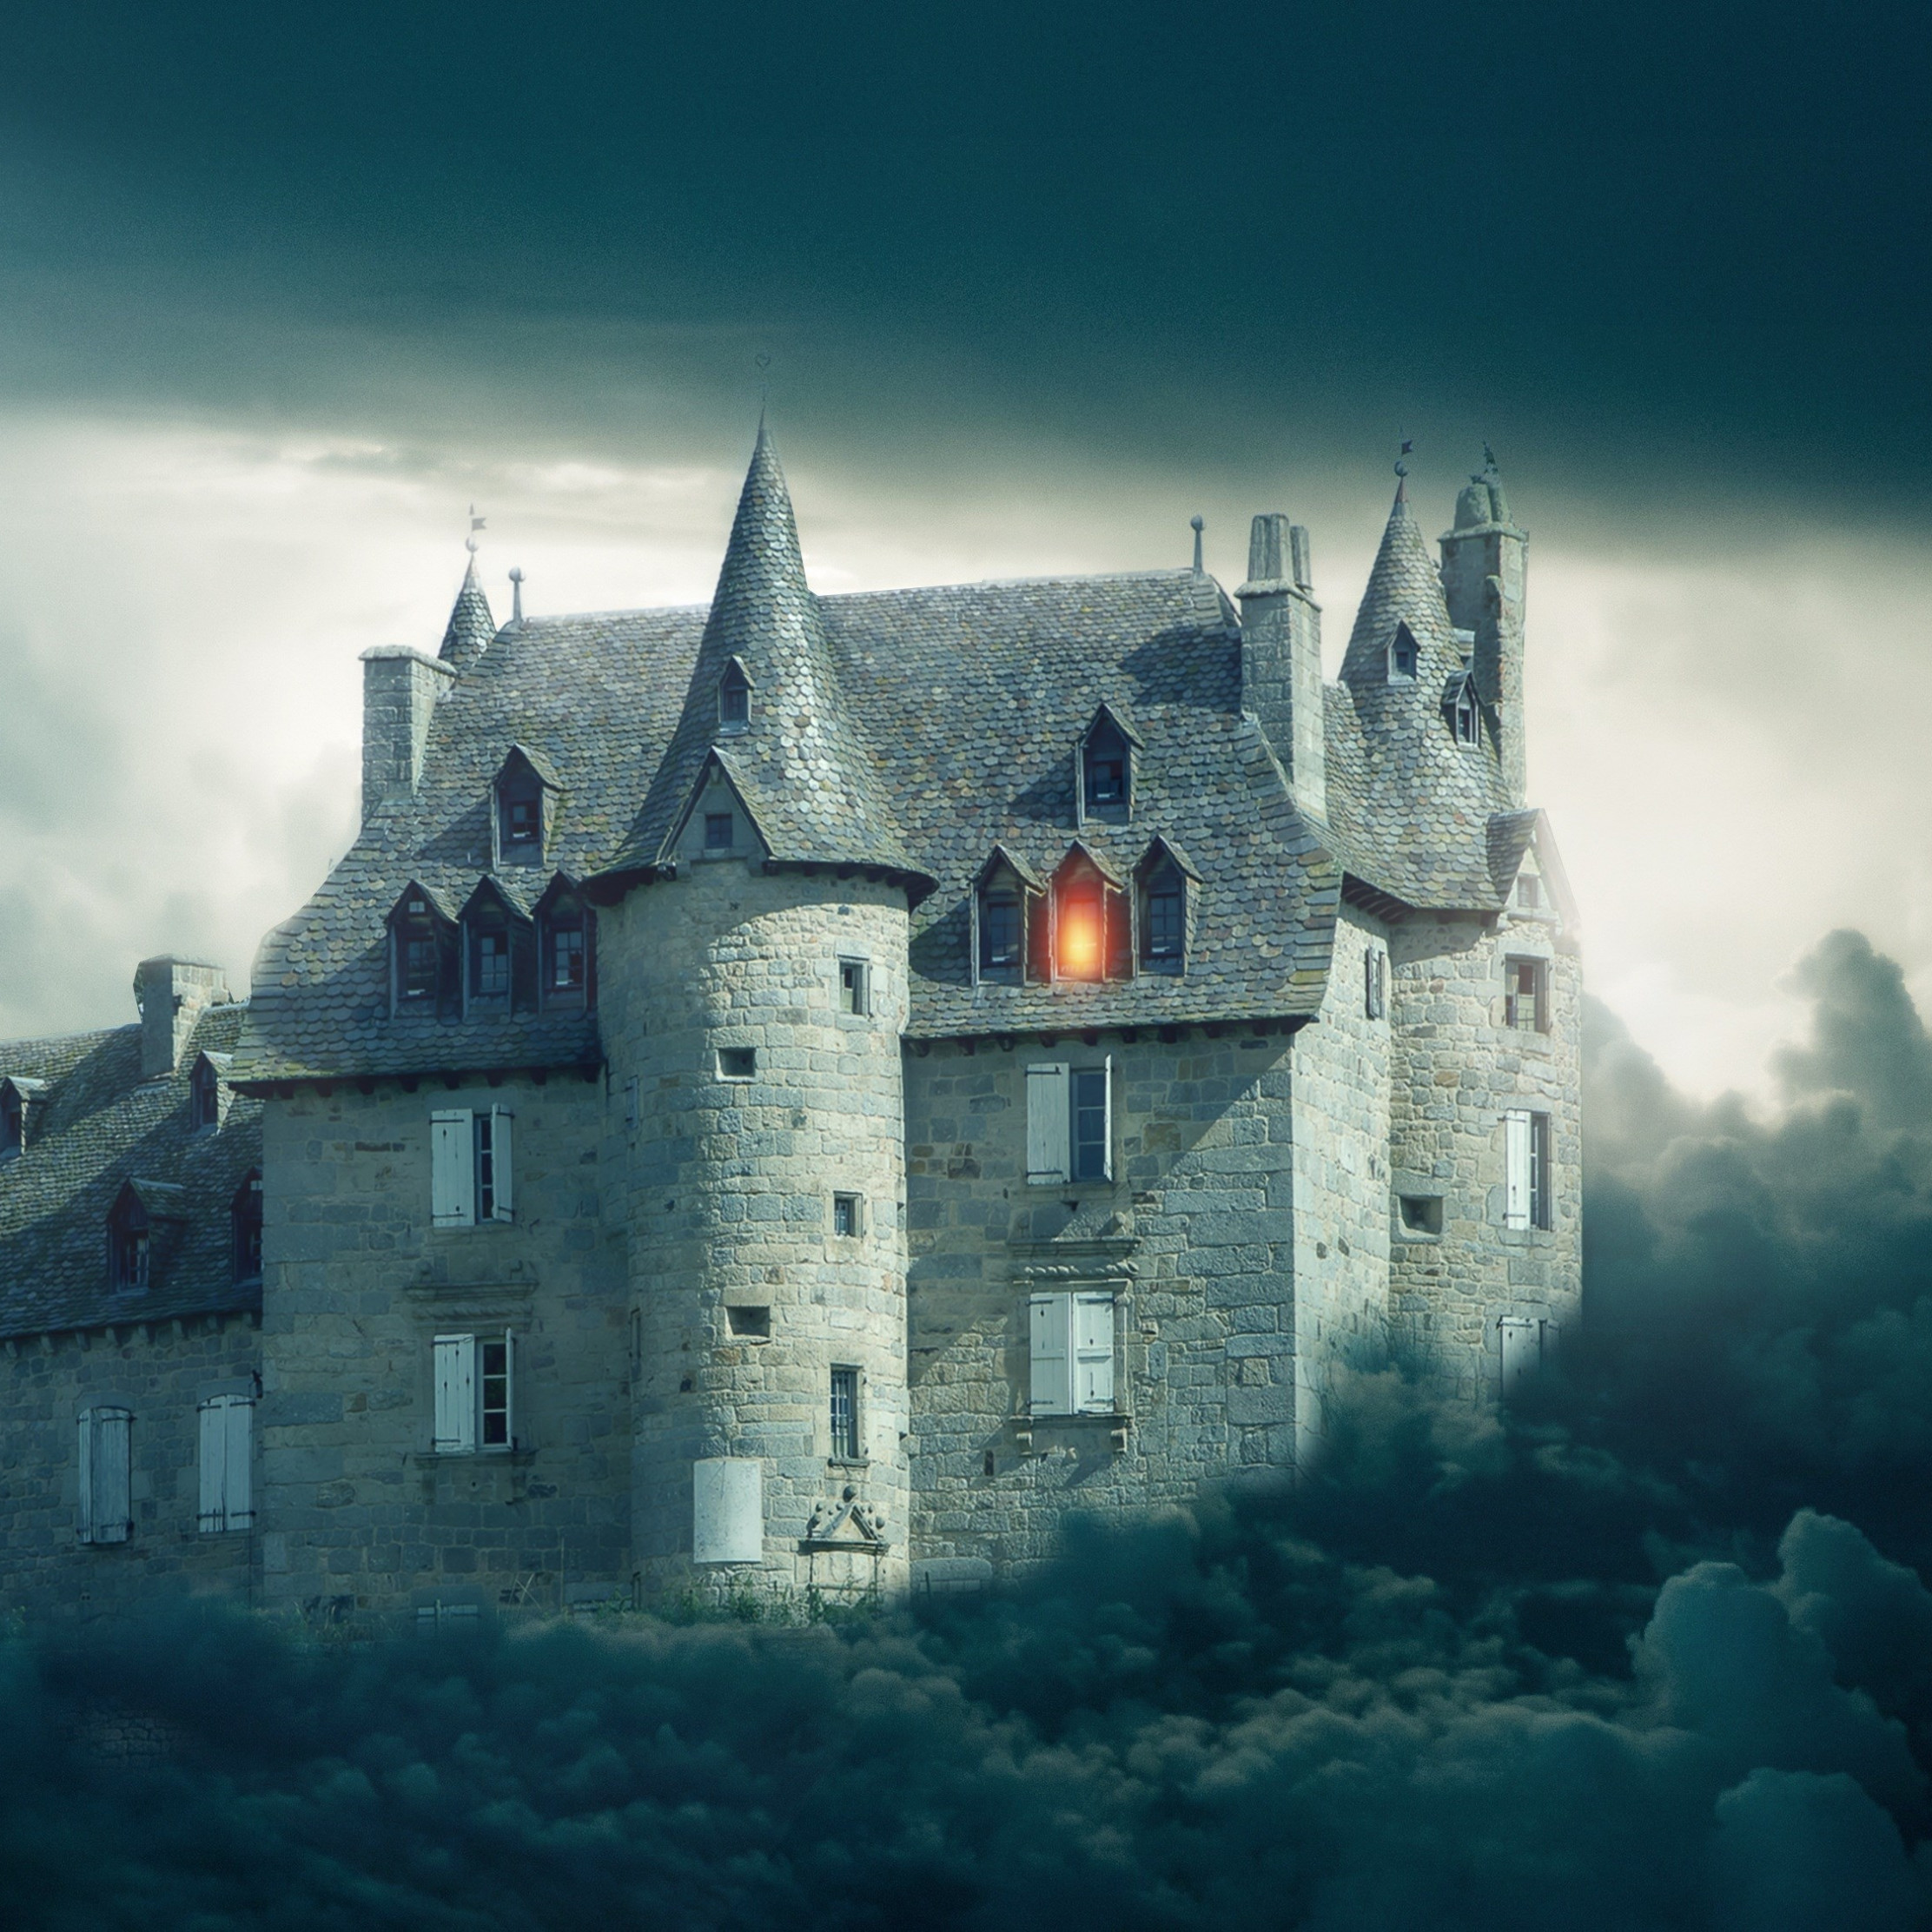 Download wallpaper: Gothic castle 2224x2224